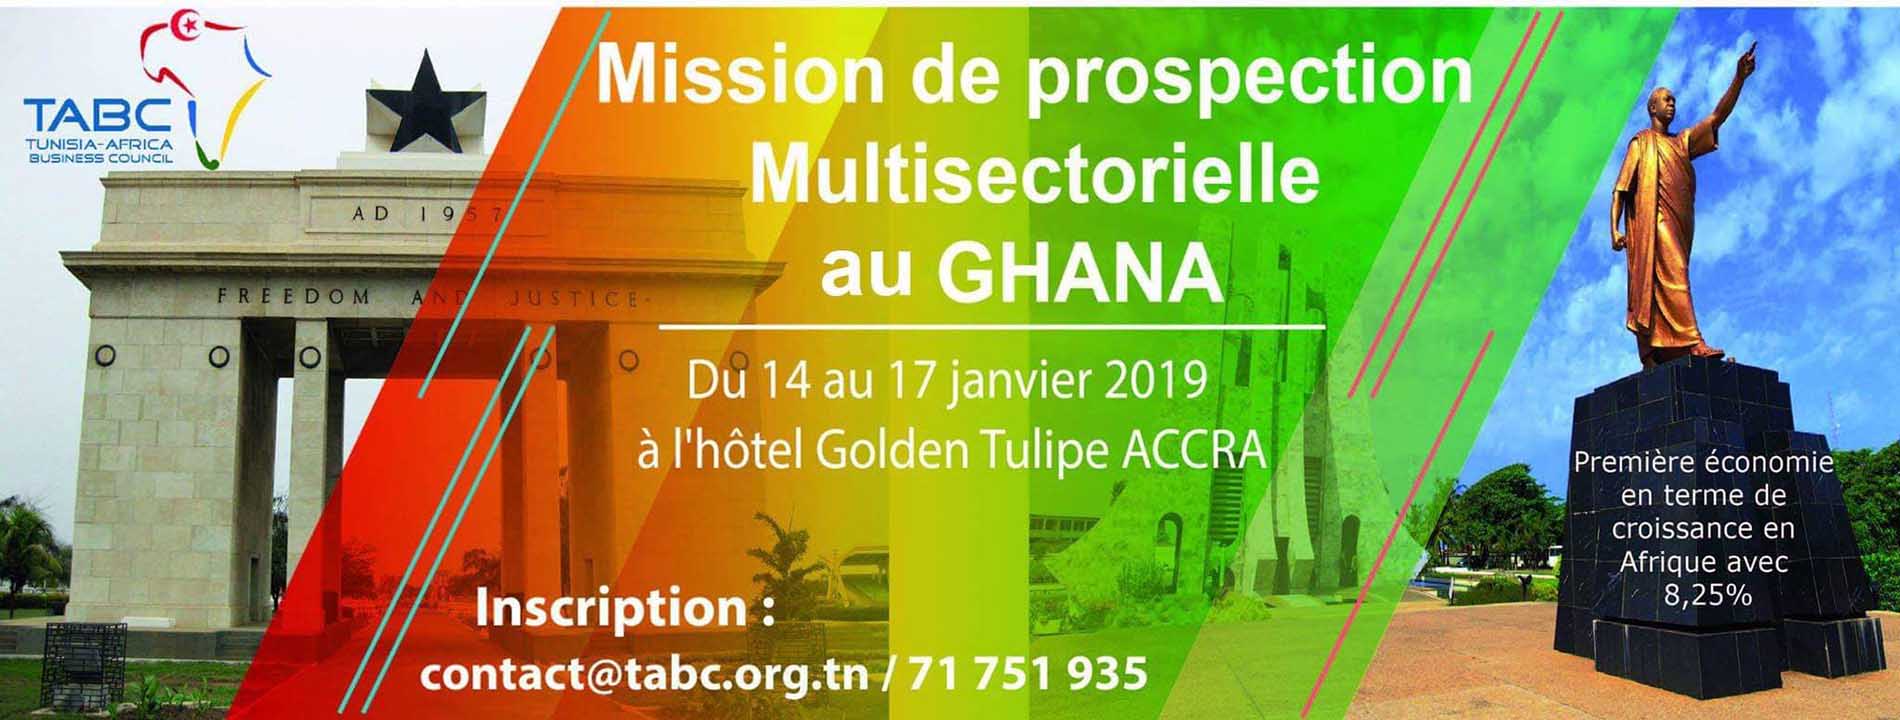 TABC organise une mission multisectorielle au Ghana